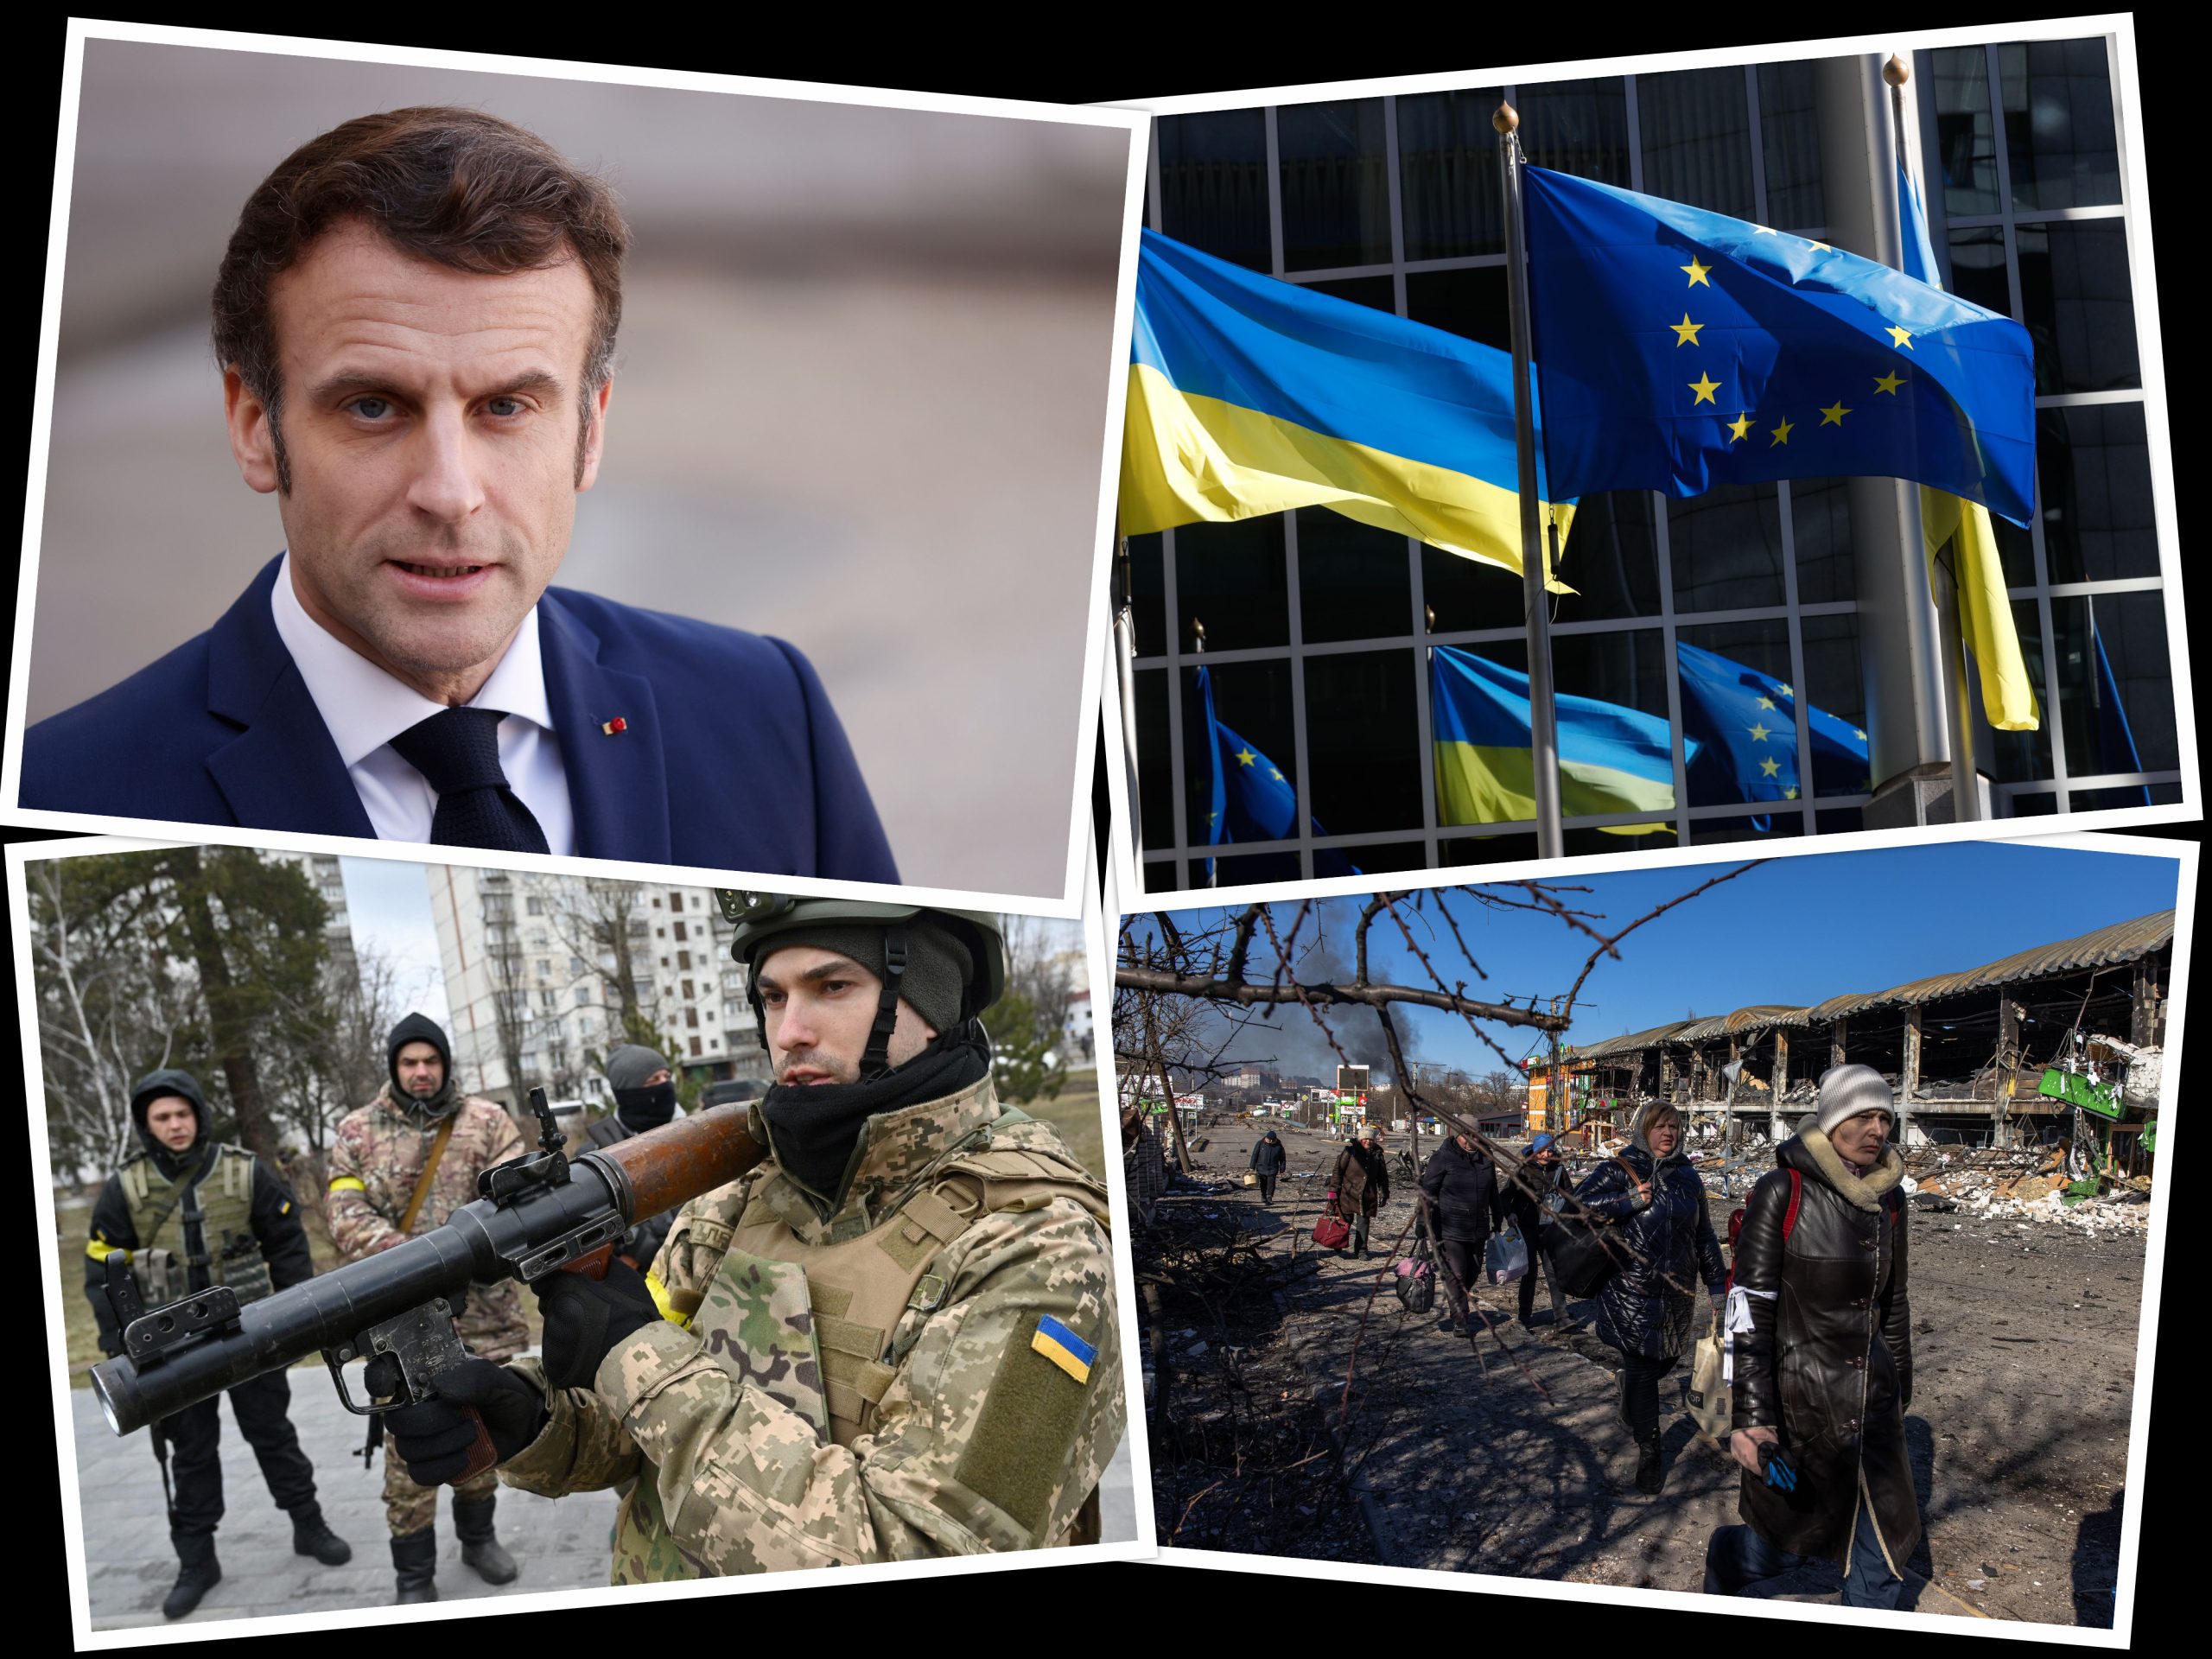 Emanuel Makron, Ukrajina, rat, vojska, EU, zastave, zastava